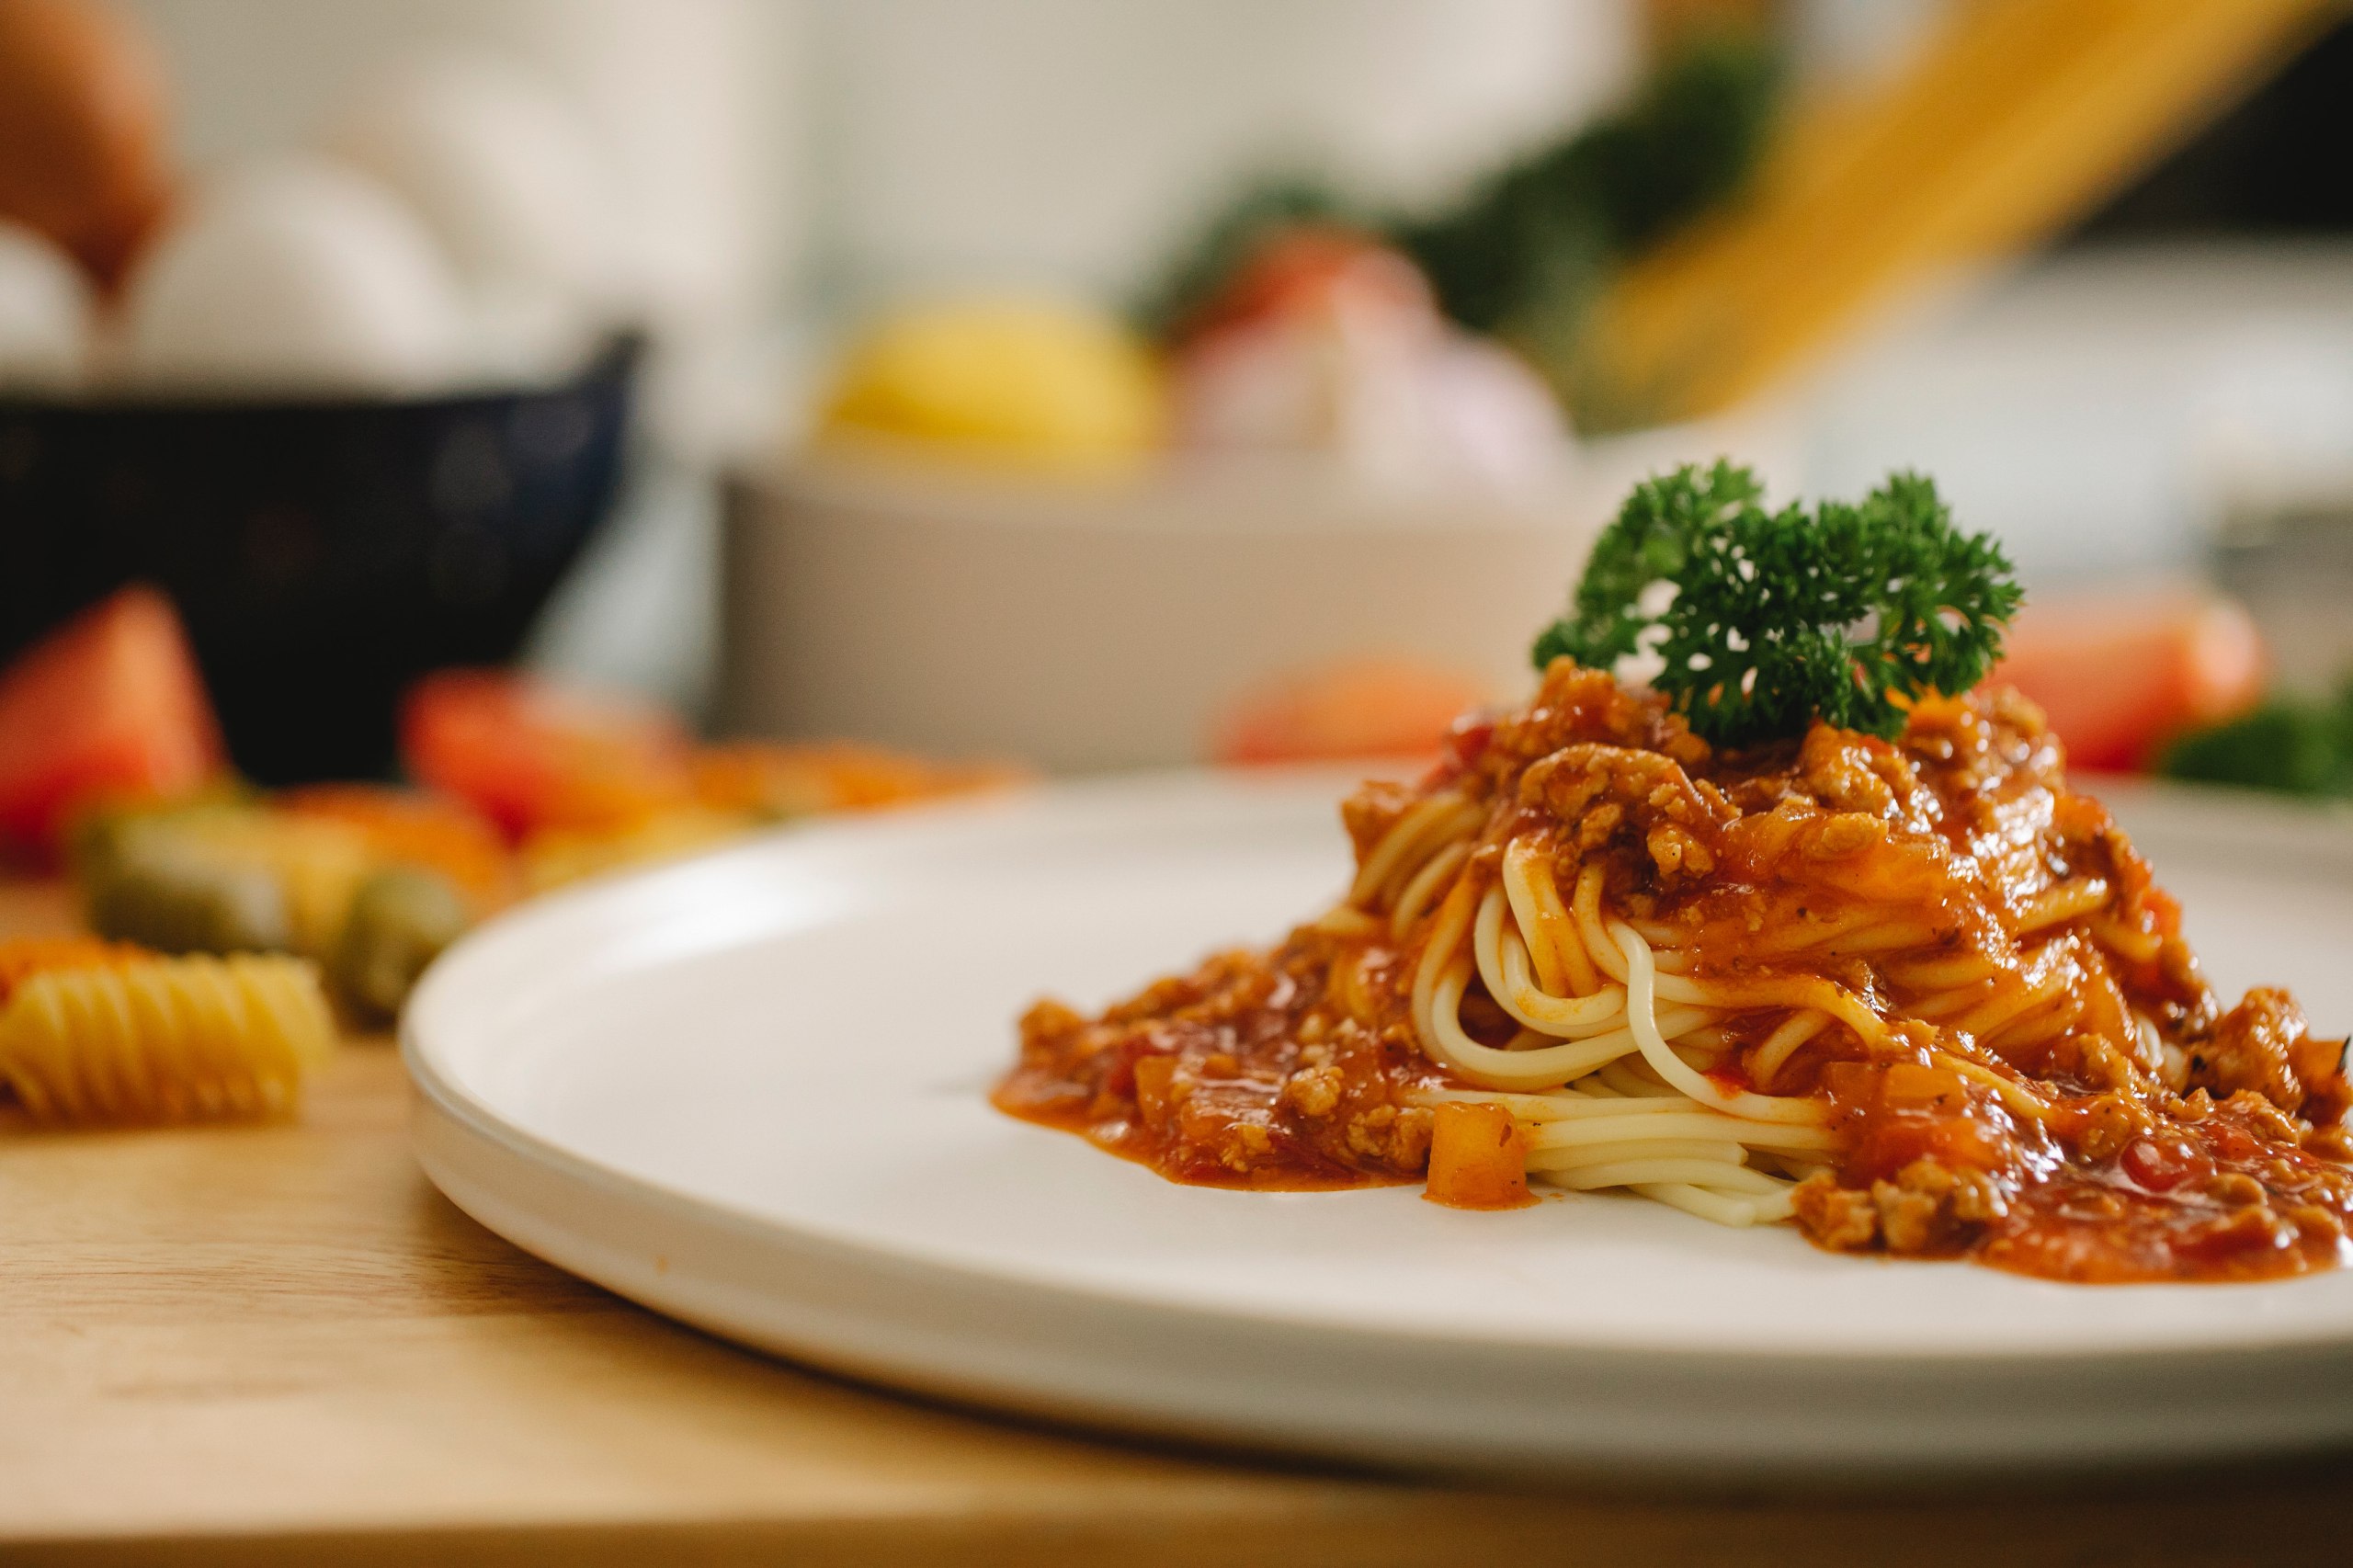 Spaghetti Squash with Vegan Tomato Sauce